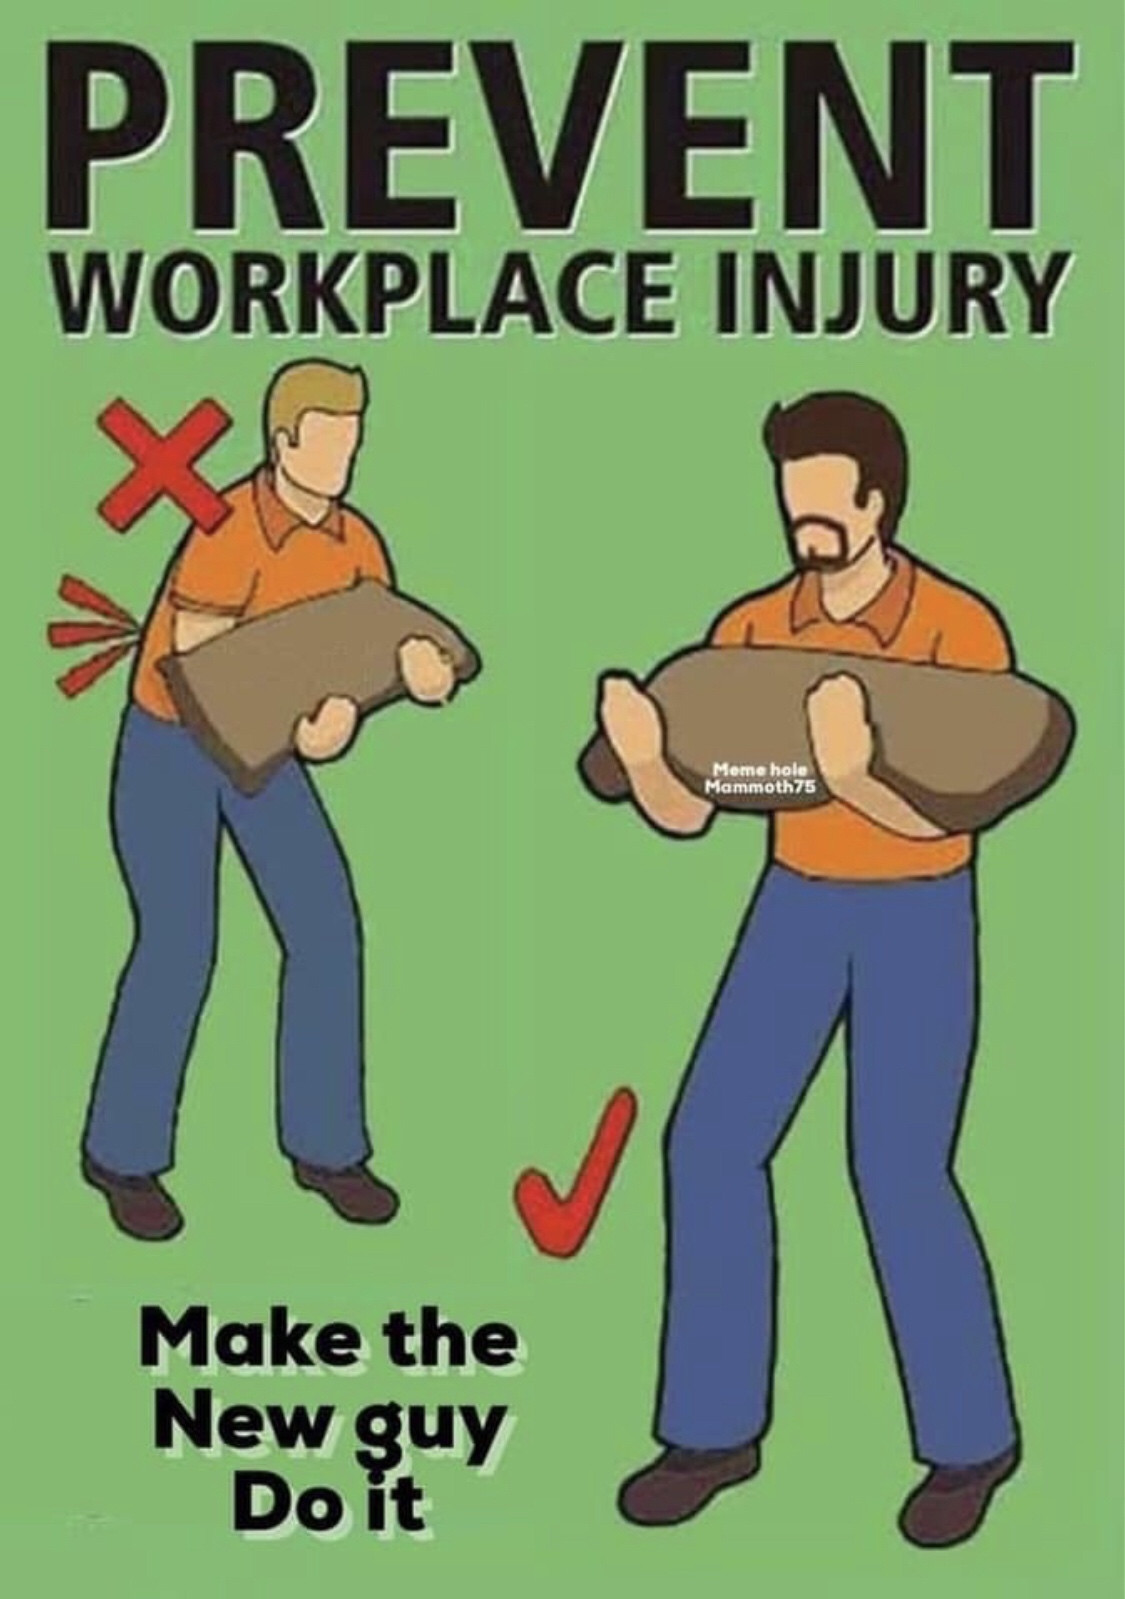 prevent workplace injury - Prevent Workplace Injury Meme hole Mammoth75 Make the New guy Do it